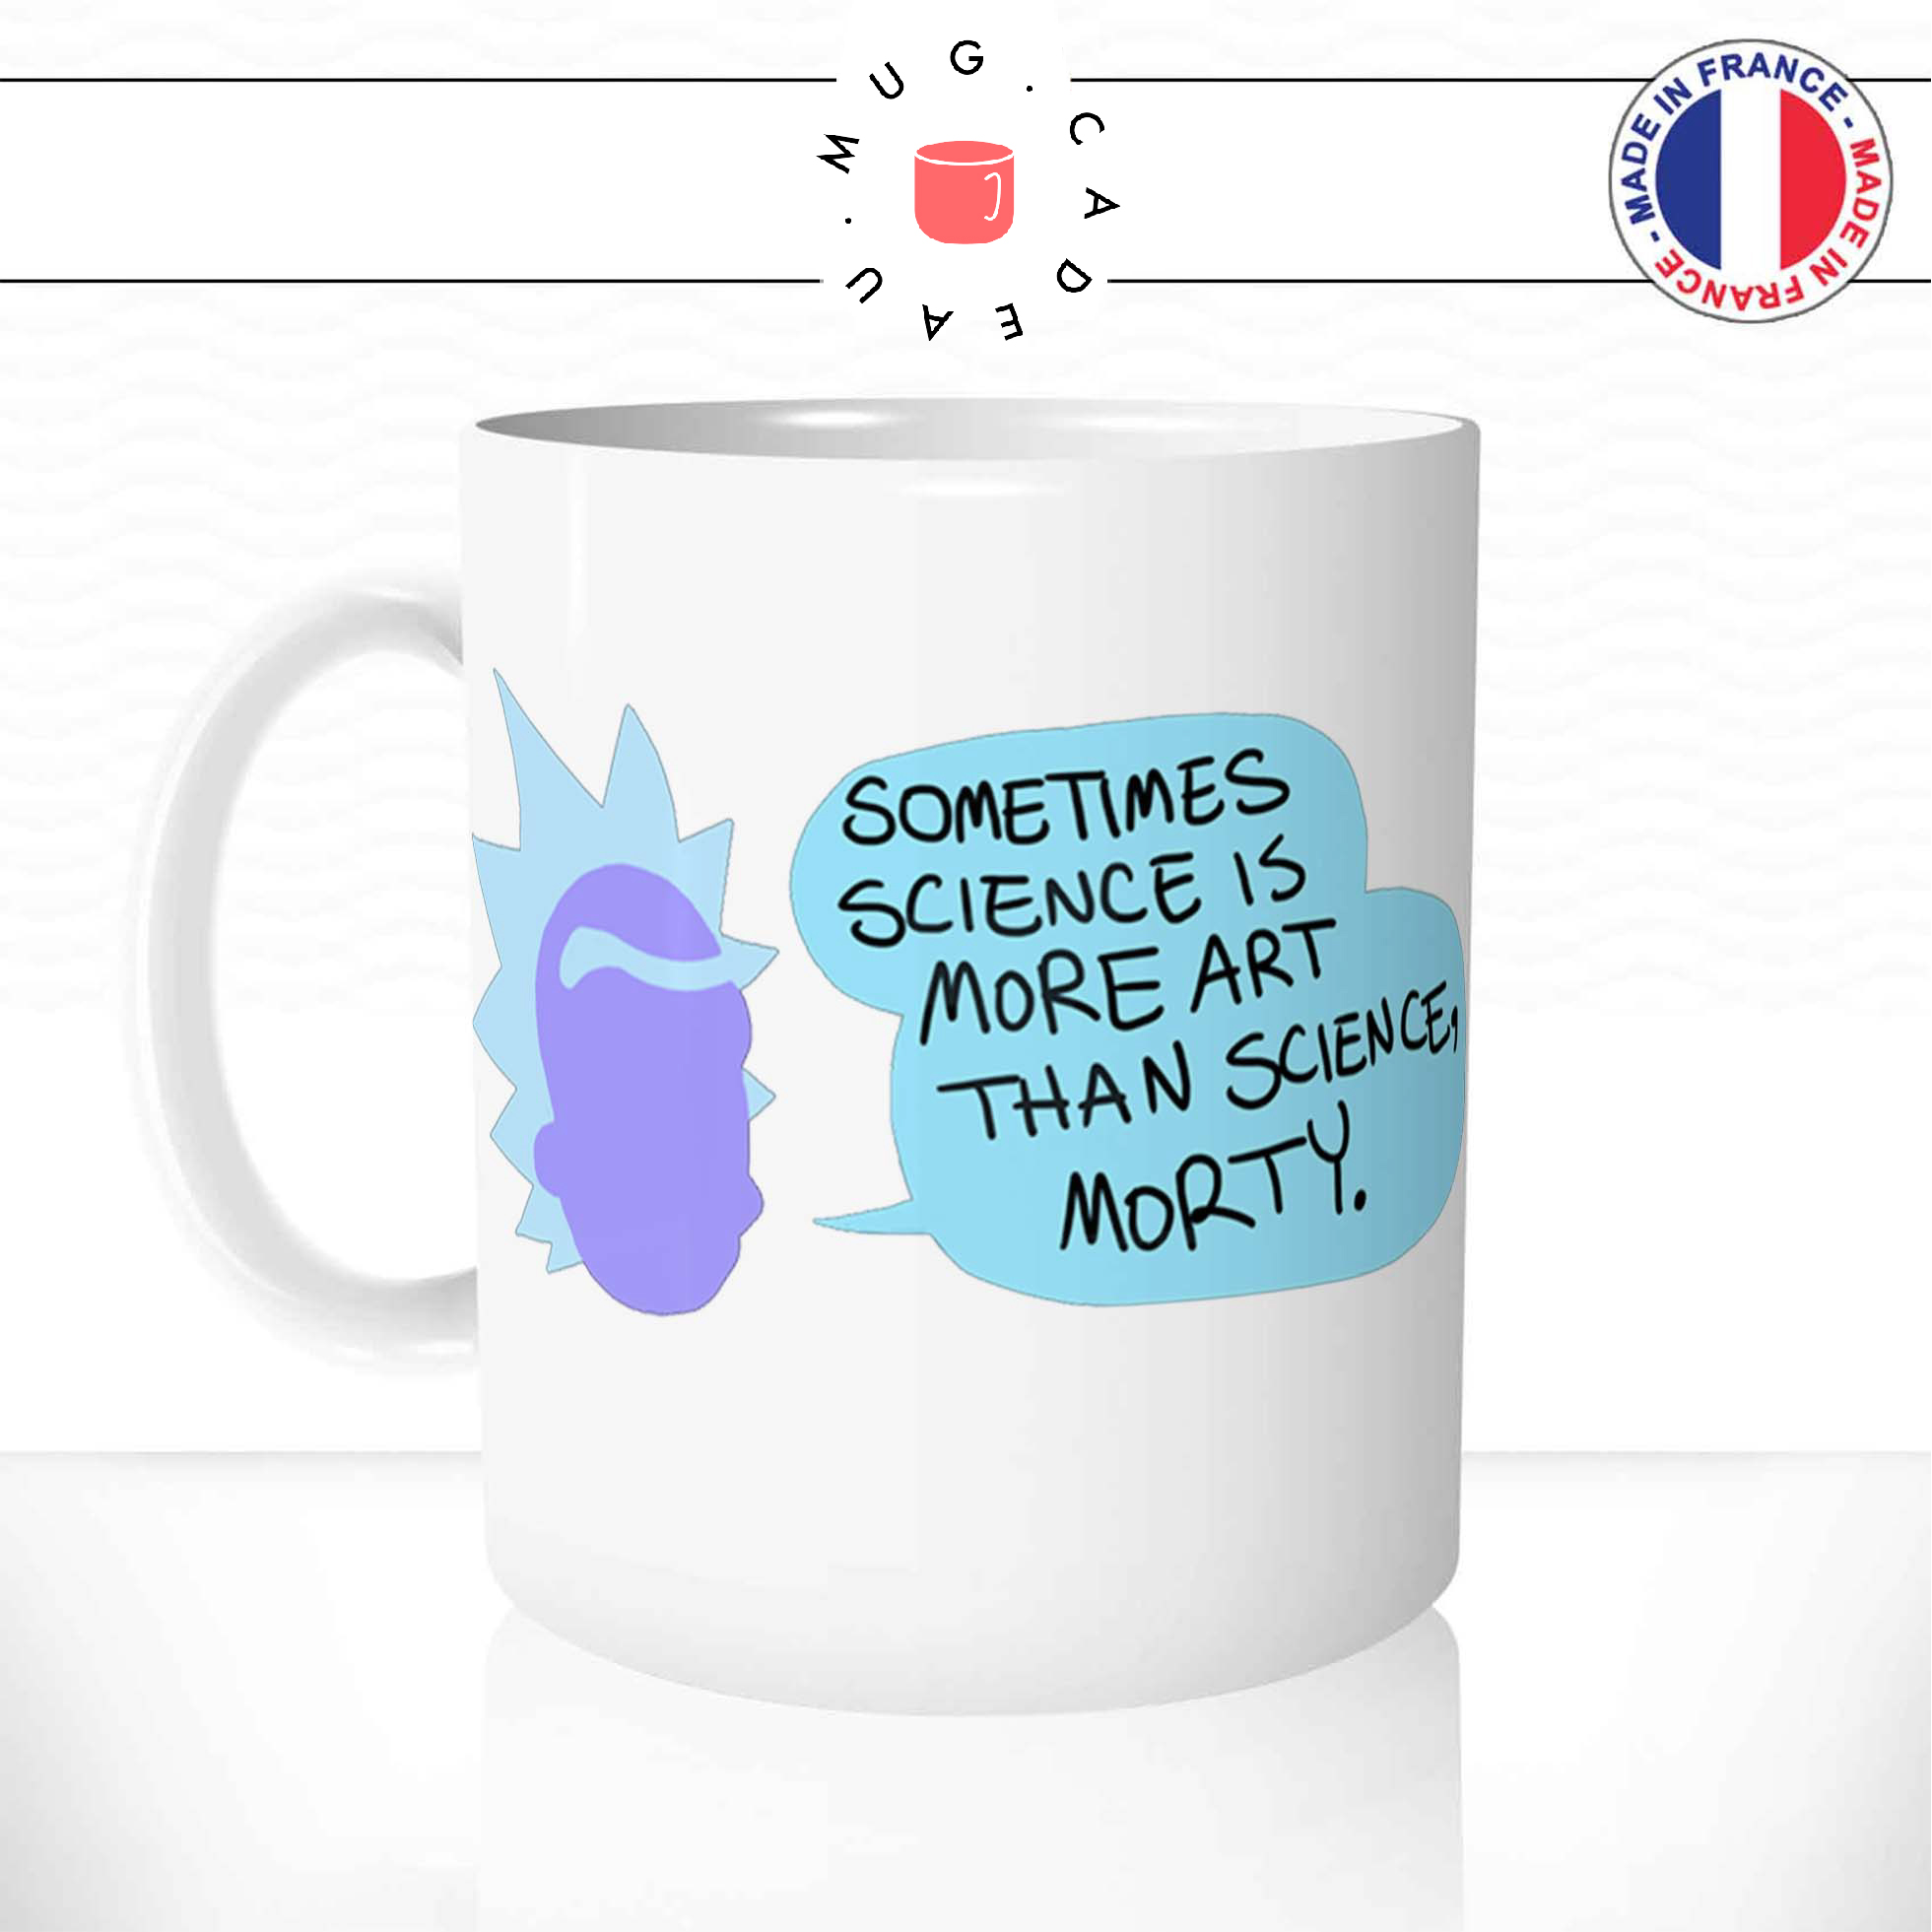 mug-tasse-ref2-film-serie-netflix-rick-morty-citation-art-science-cafe-the-mugs-tasses-personnalise-anse-gauche